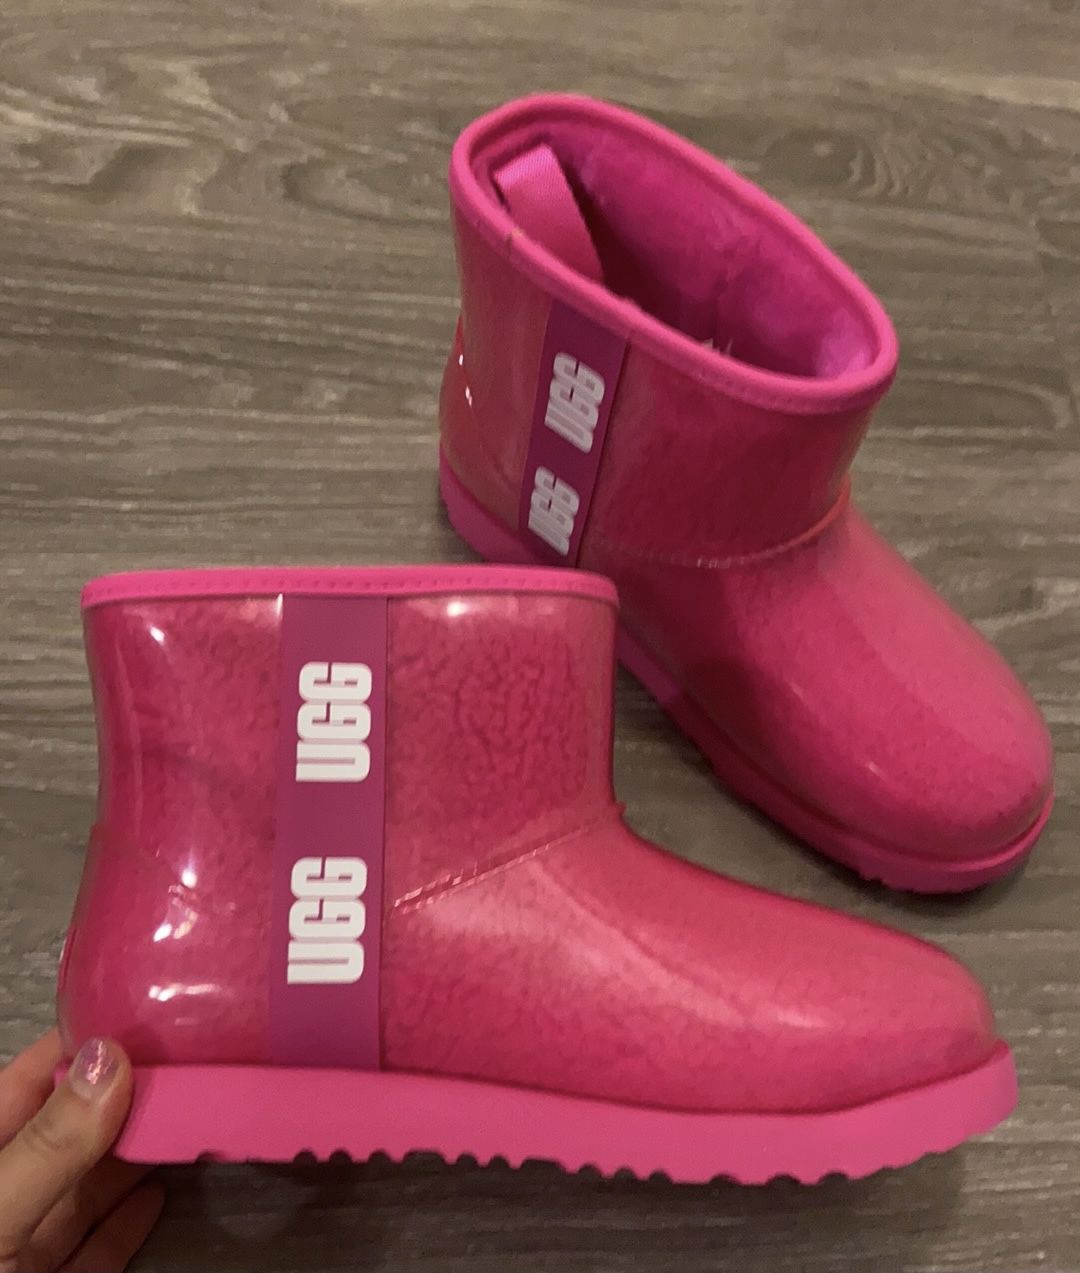 UGG Australia waterproof boots. Fit 7